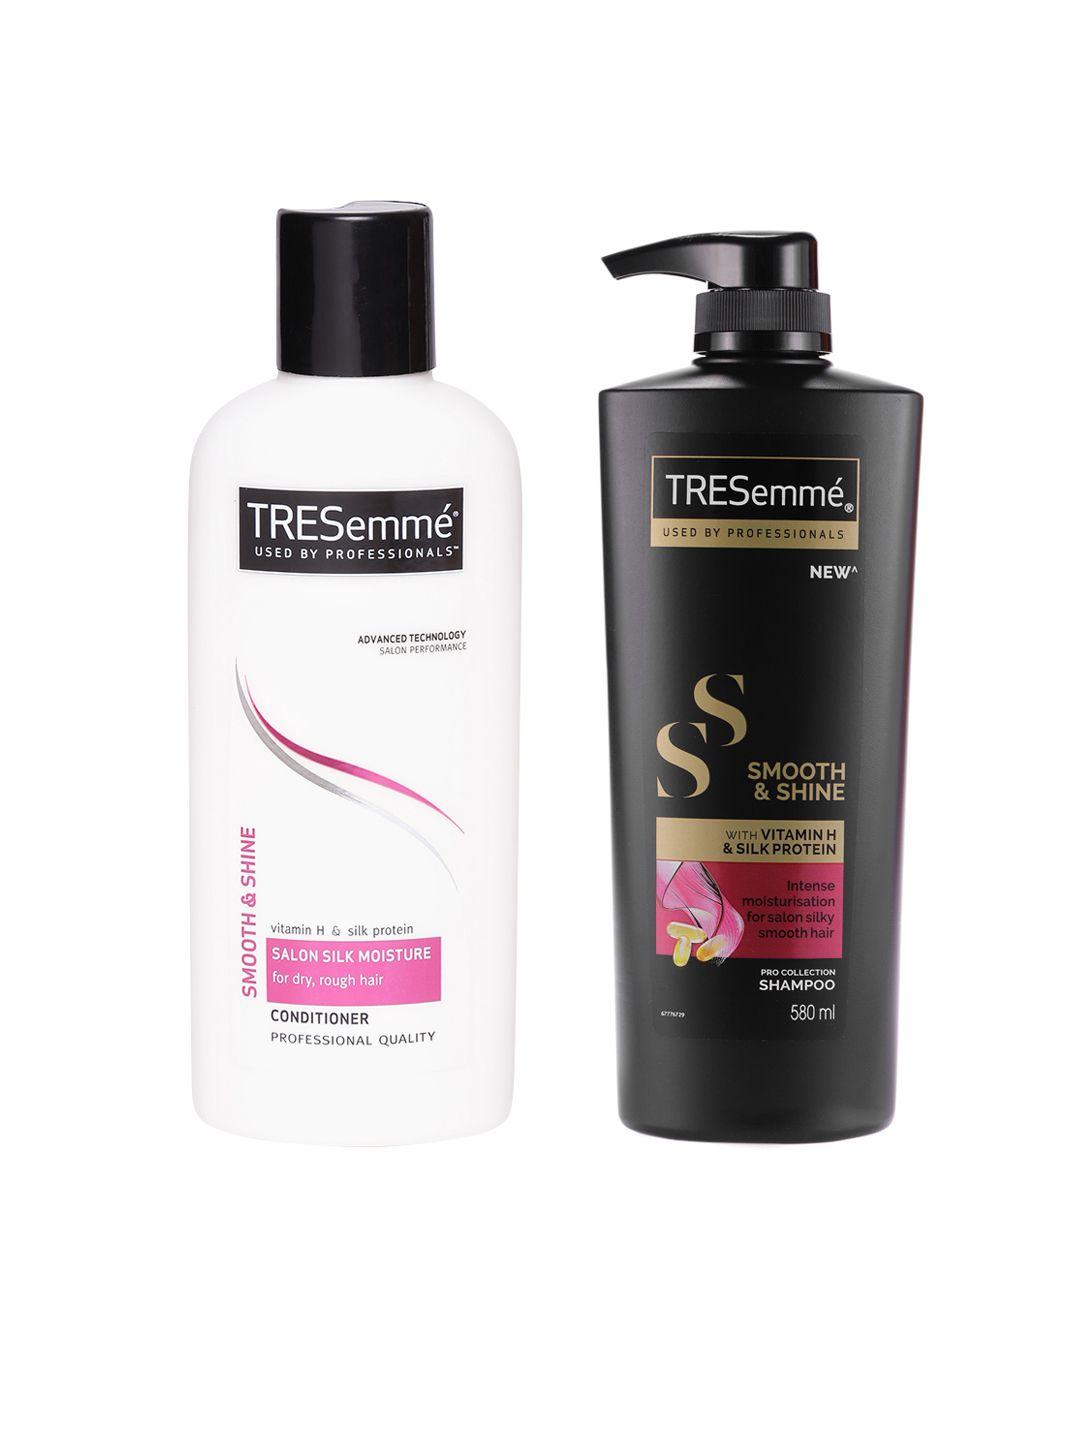 tresemme set of smooth & shine shampoo 580ml & conditioner 190ml